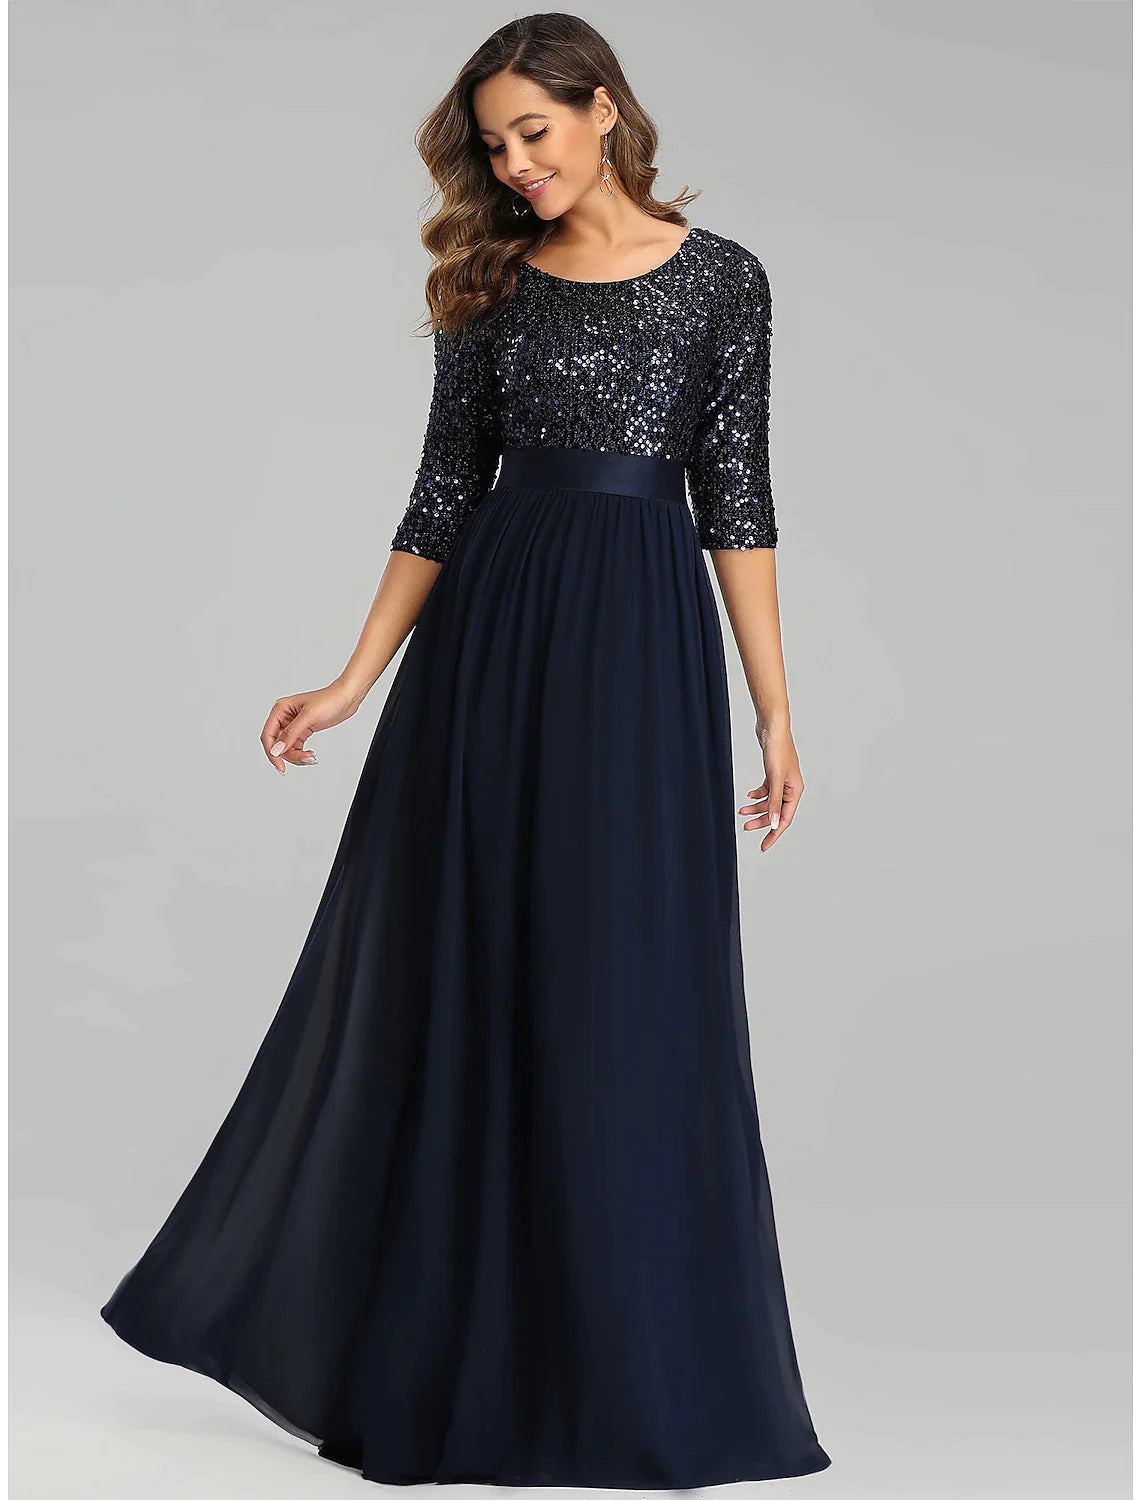 A-Line Elegant Wedding Guest Formal Evening Dress Jewel Neck 3/4 Length Sleeve Floor Length Tulle with Sequin